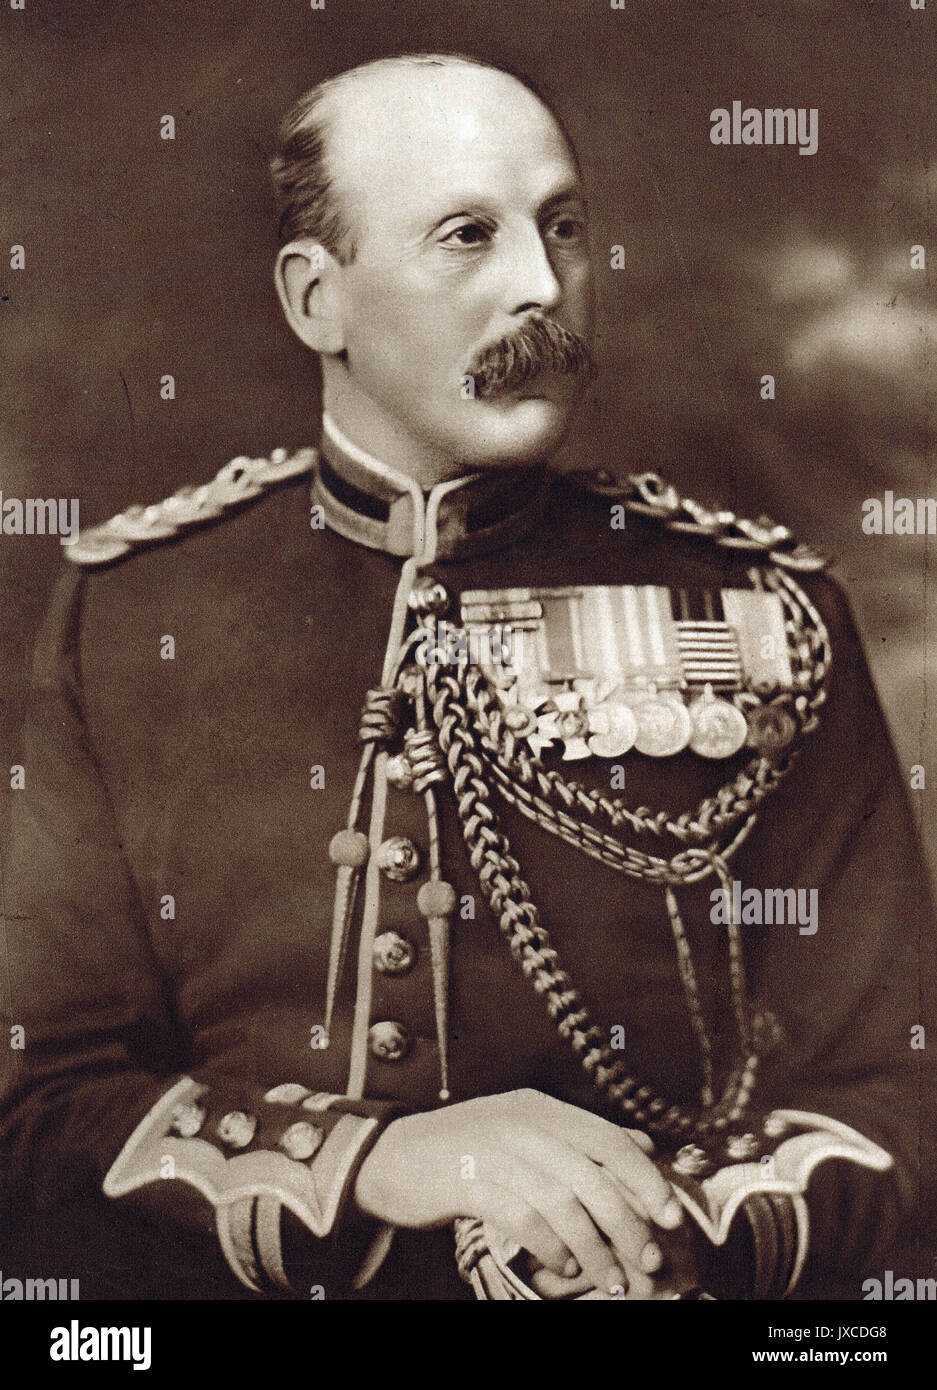 General Maude conqueror of Baghdad, 1917 Stock Photo